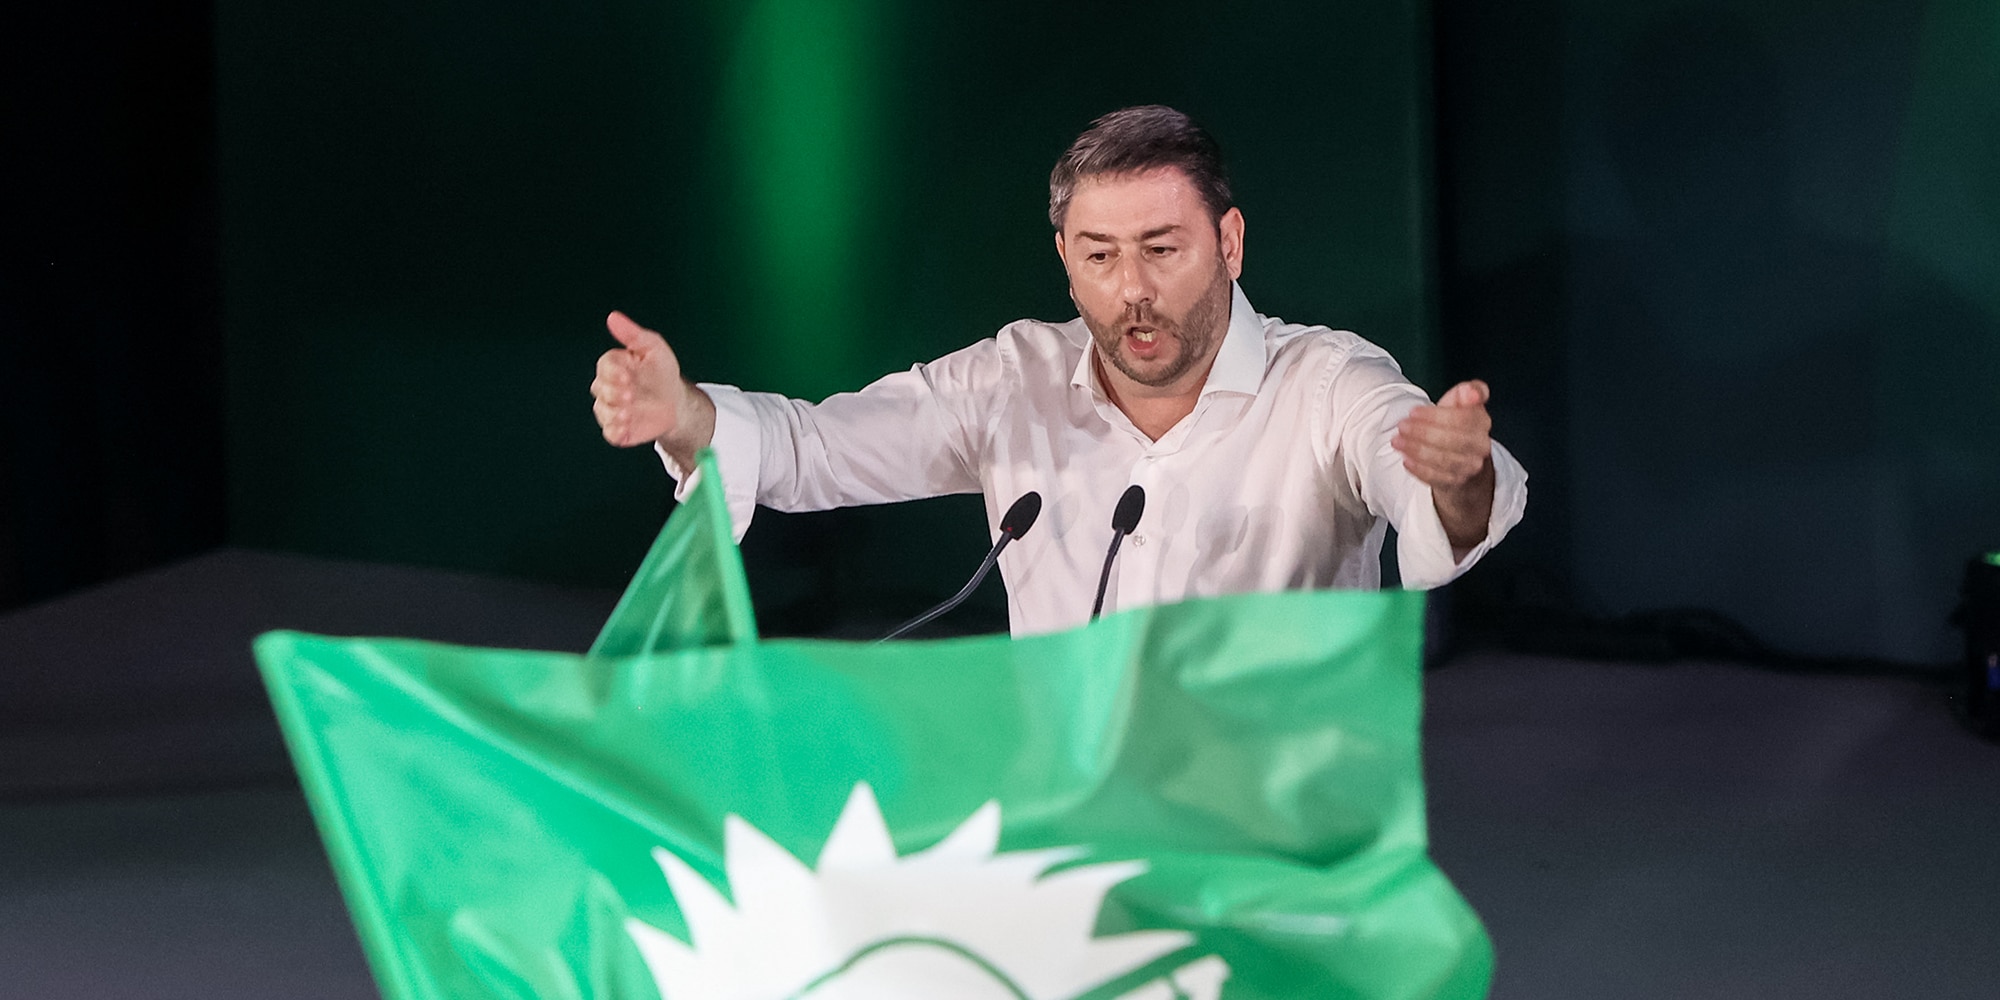 androulakis - Ανδρουλάκης: «Στόχος του ΠΑΣΟΚ να είναι ισχυρός αντίπαλος της ΝΔ»